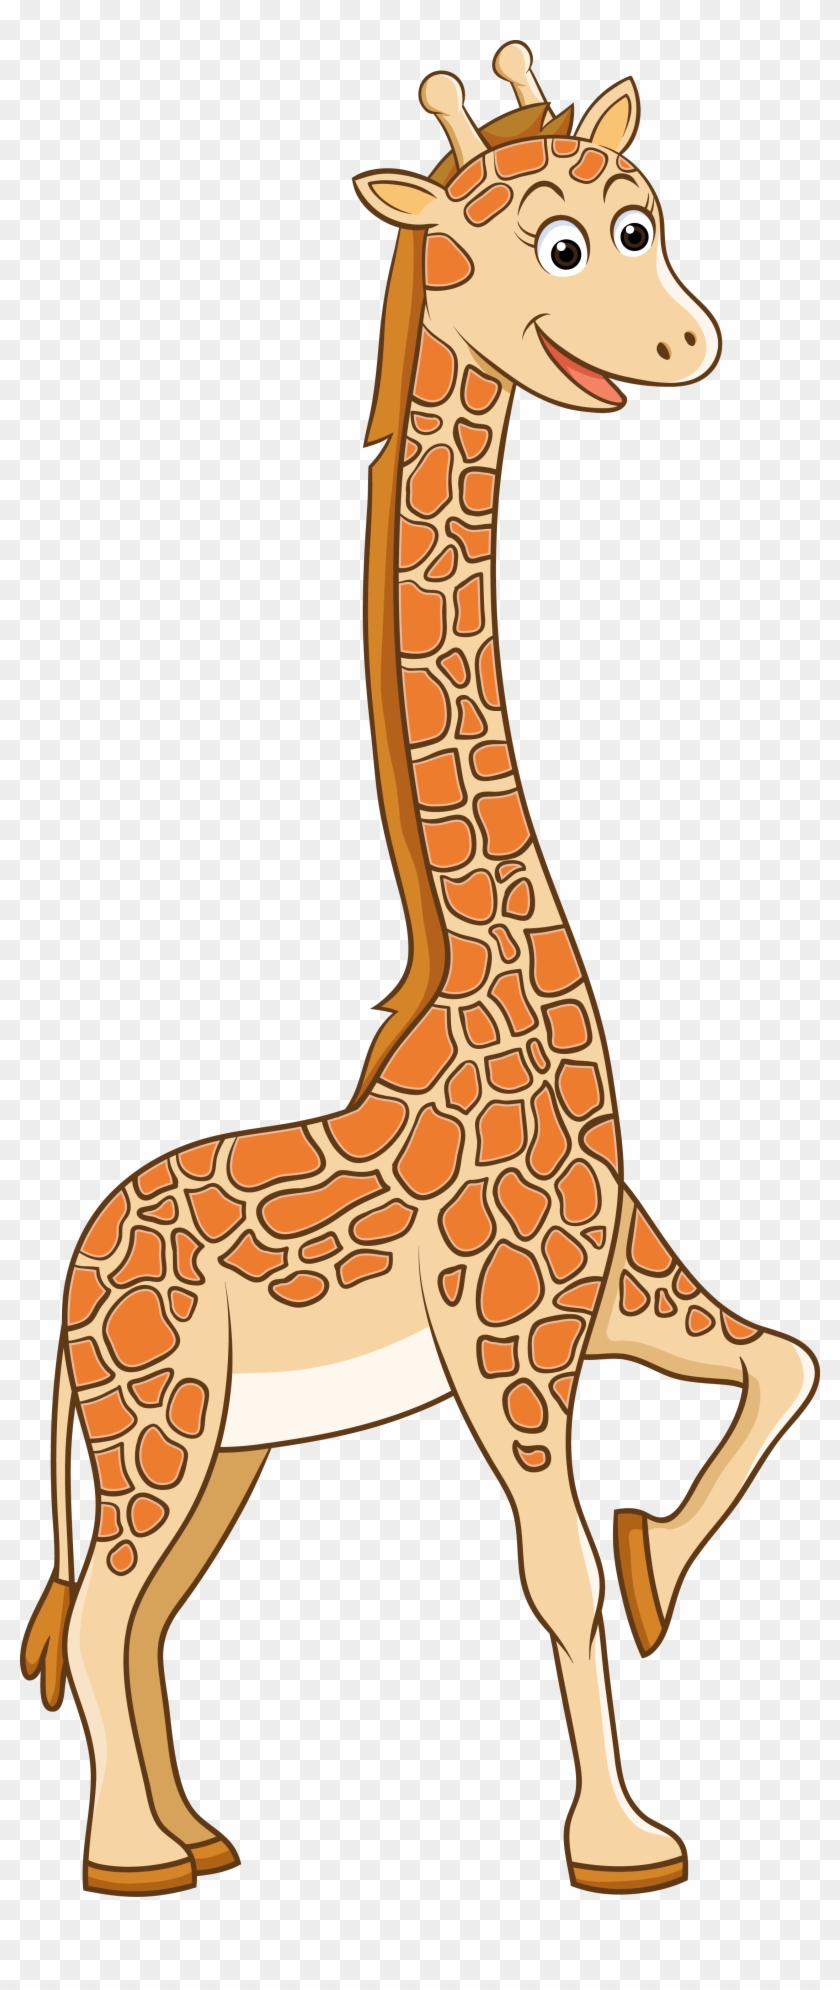 Northern Giraffe Drawing Cartoon - Giraffe - Free Transparent PNG Clipart  Images Download